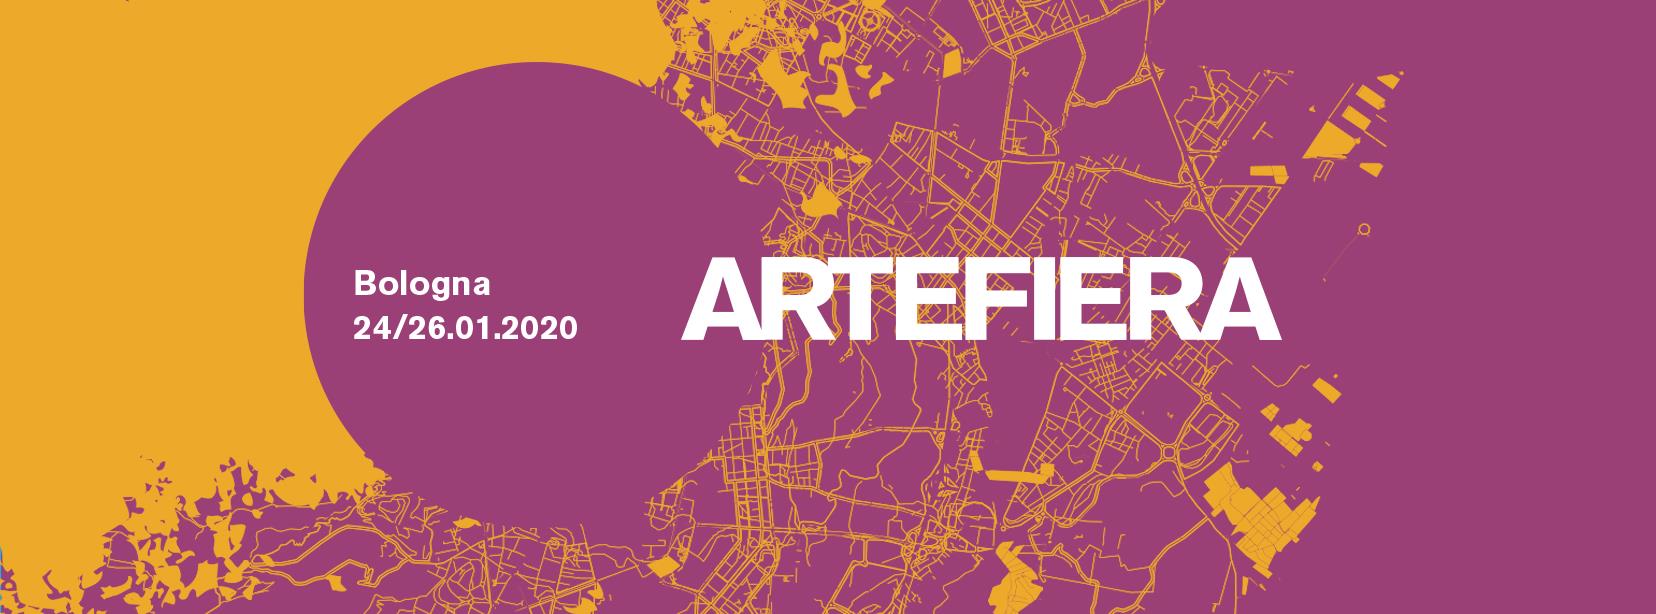 P420 - ARTEFIERA 2020 - Bologna - 